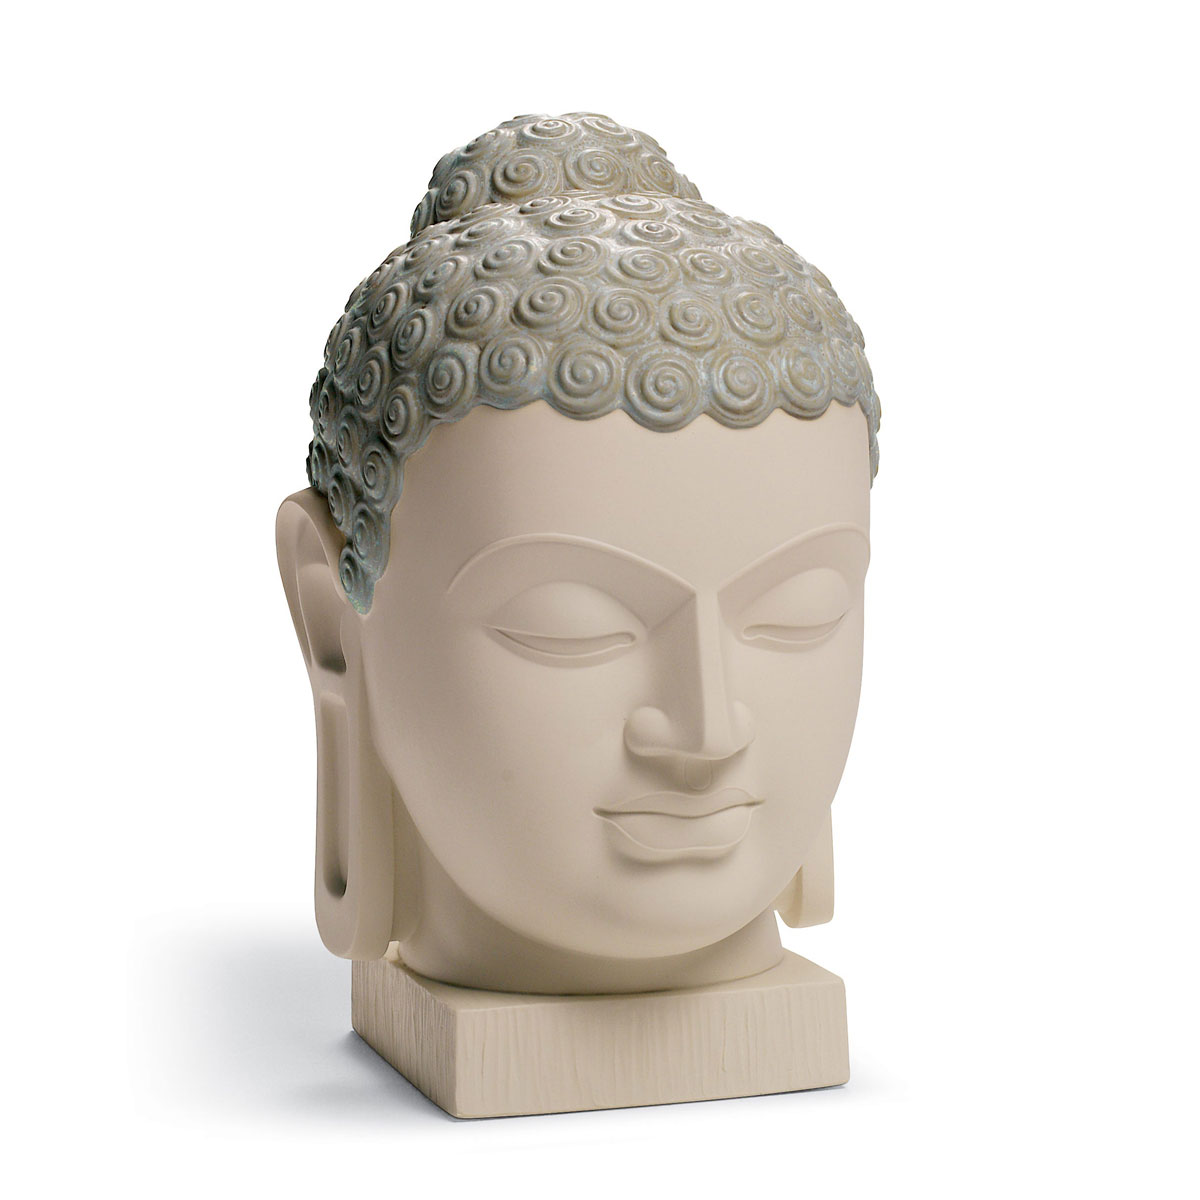 Lladro Classic Sculpture, Buddha II Figurine